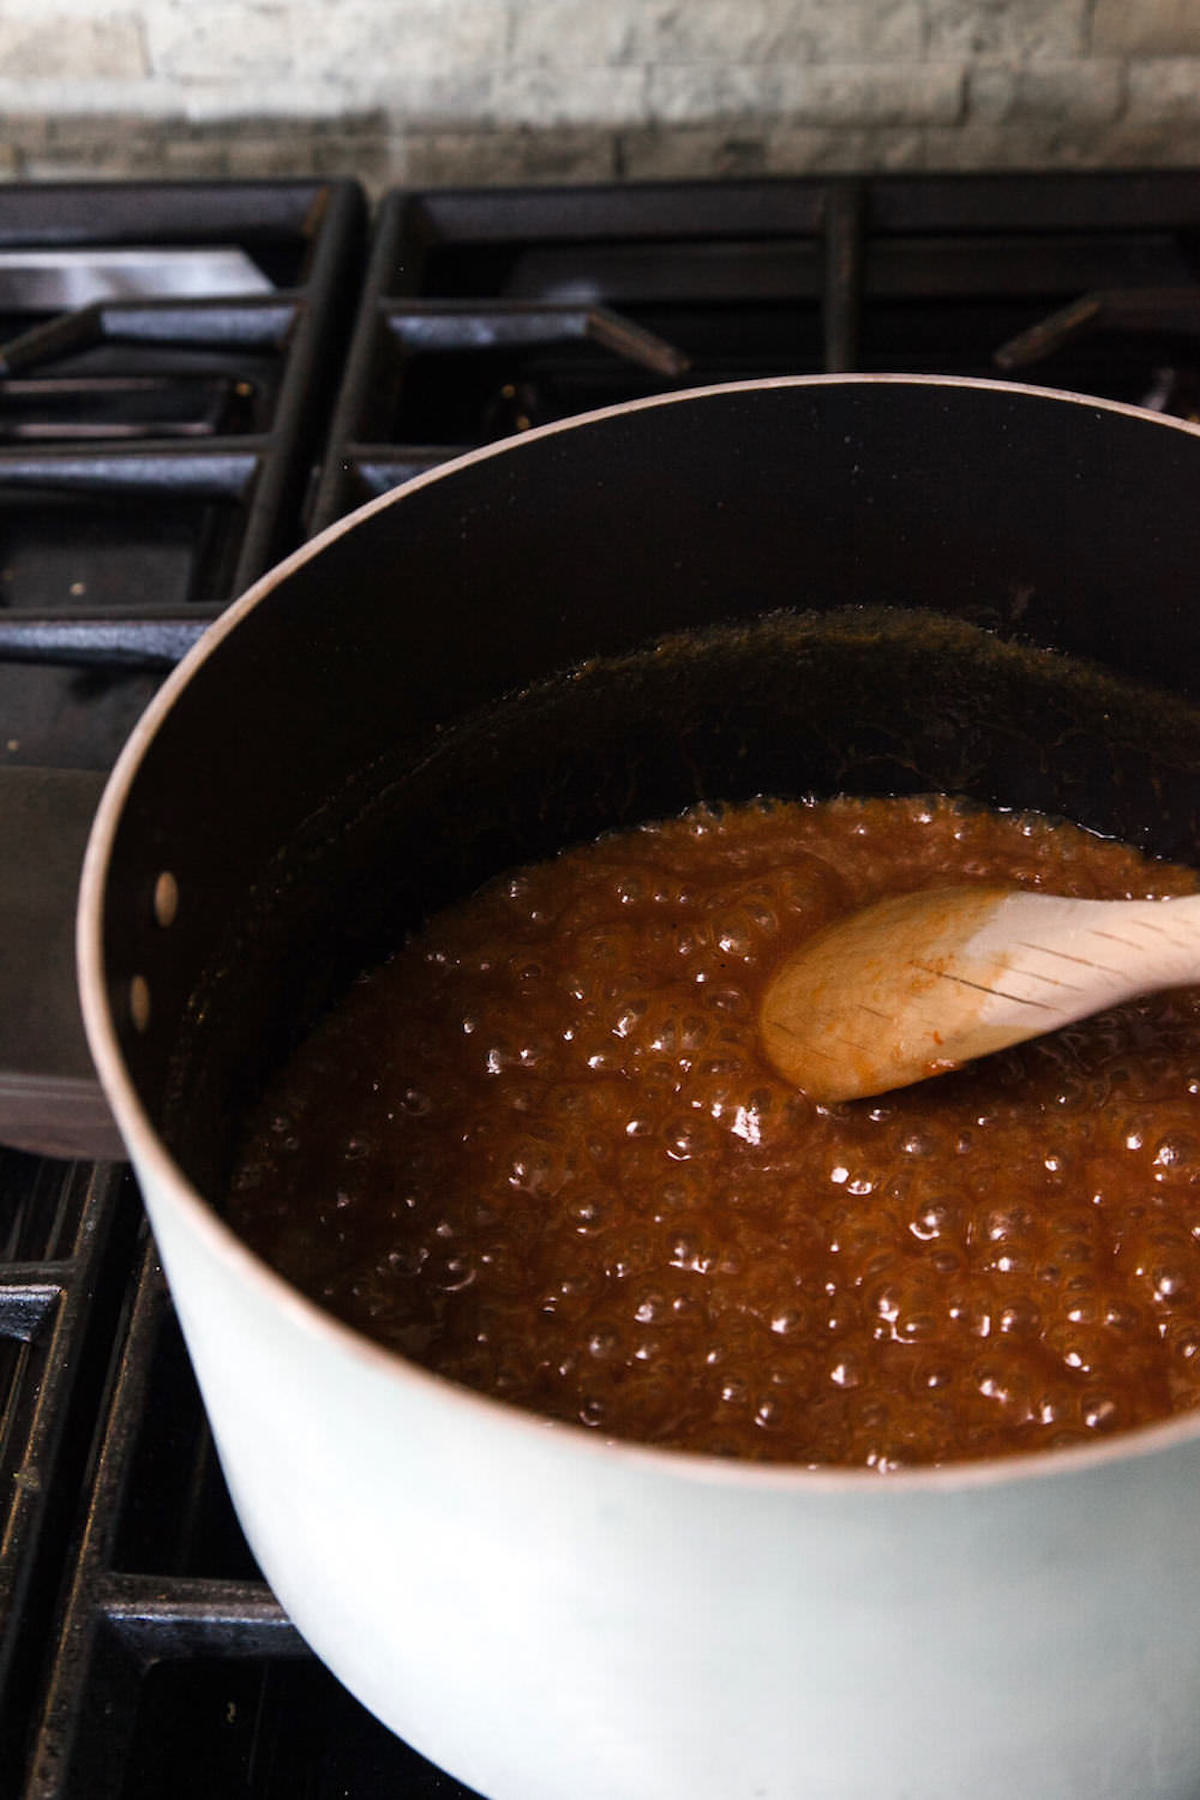 Bringing the sugar mixture to a boil